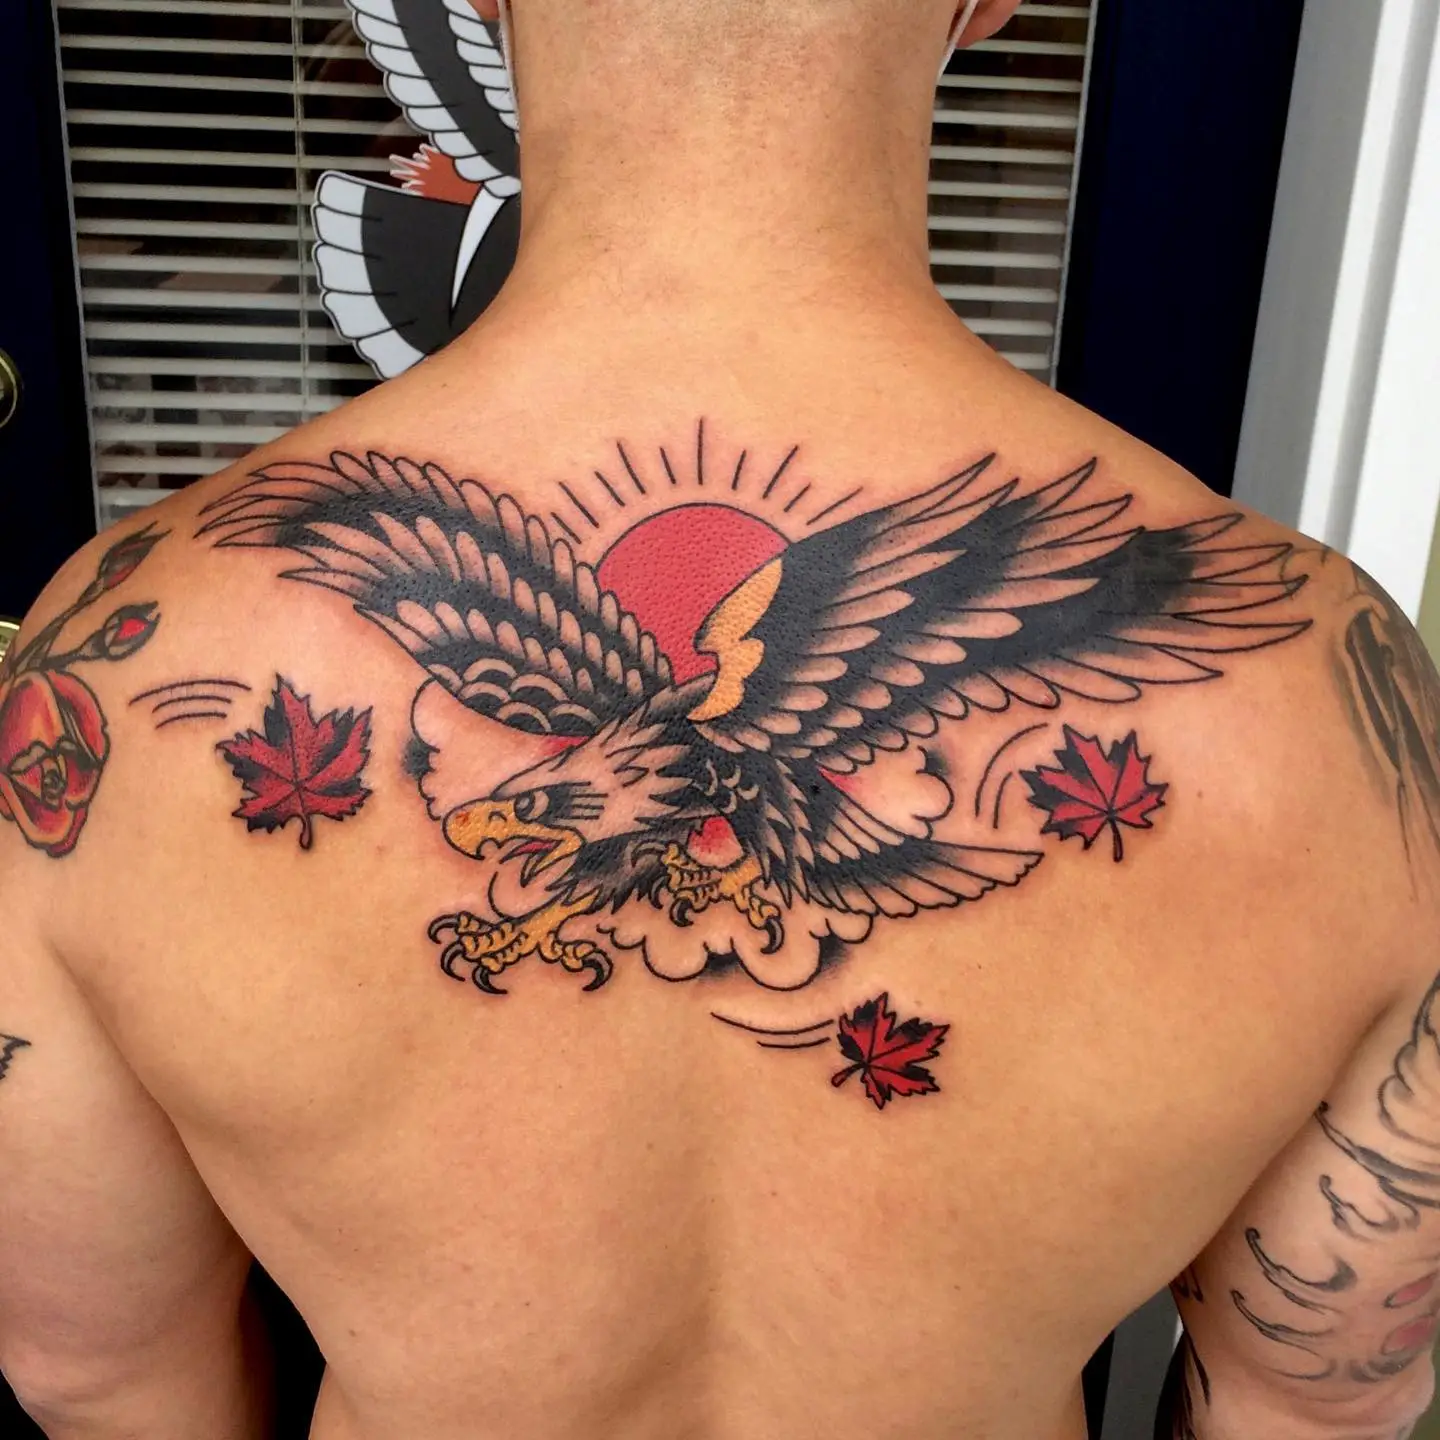 Eagle back tattoo by eagleeyetattoo